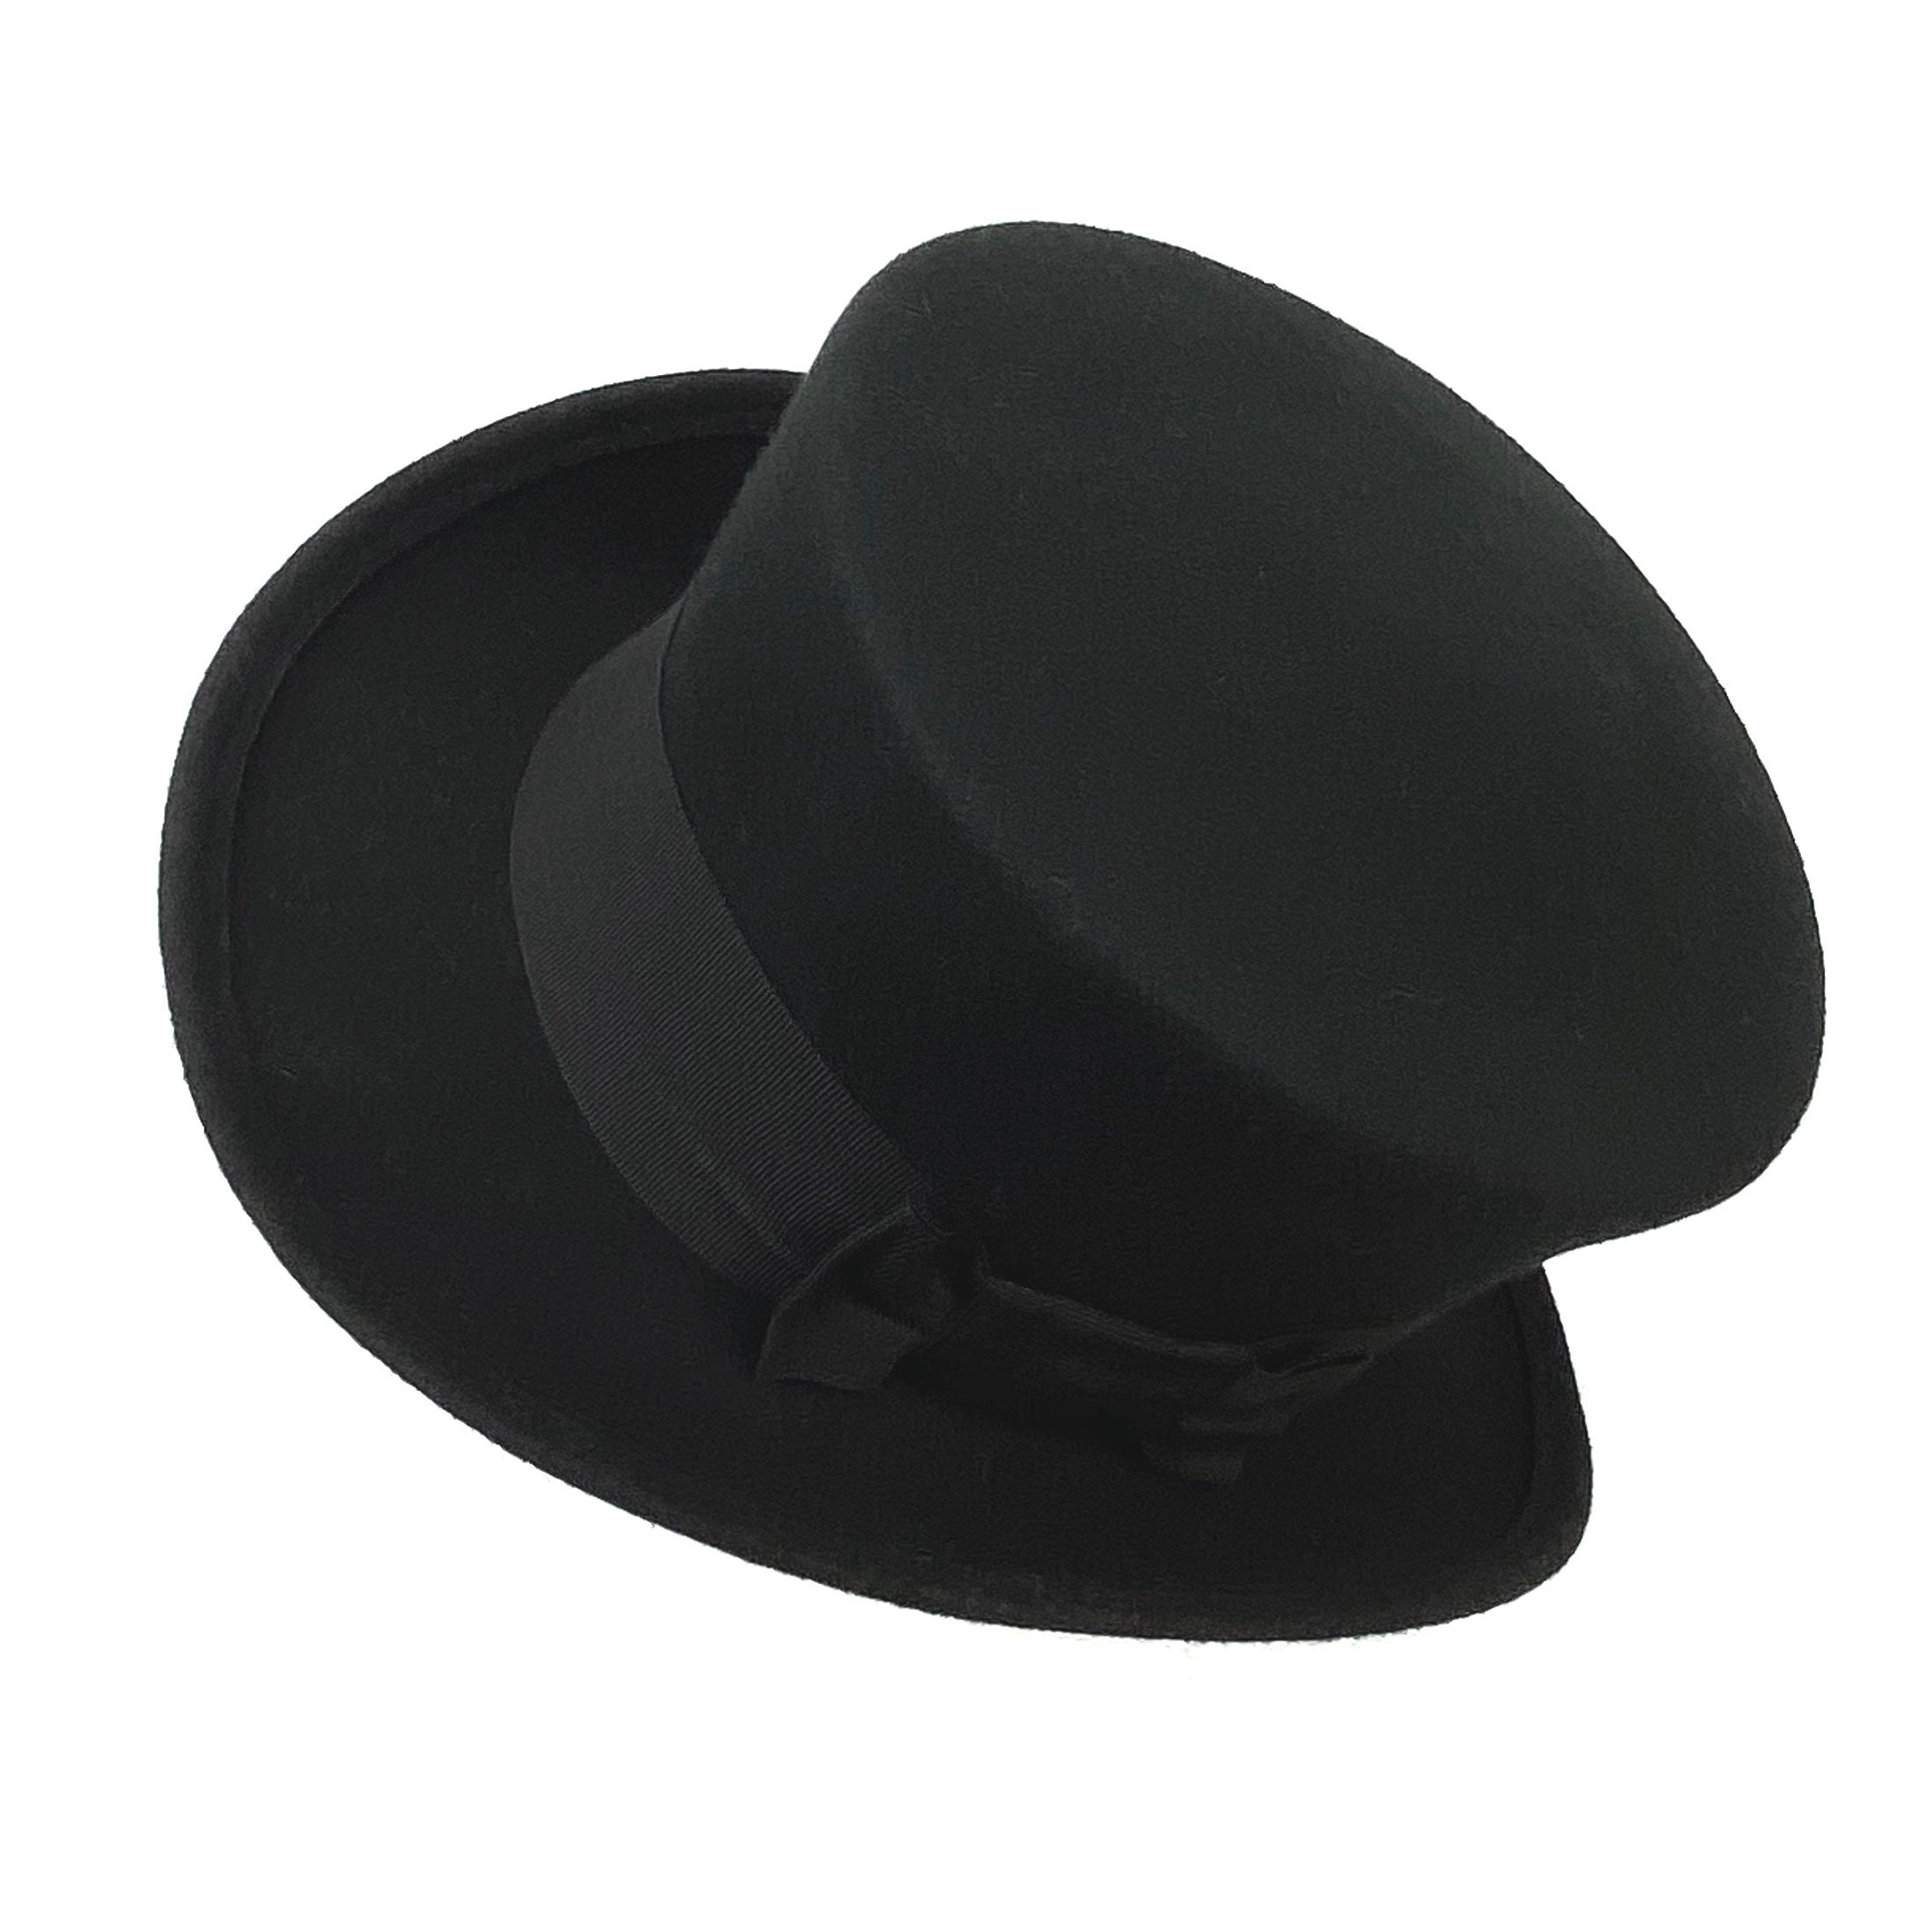 Sombrero de copa alto, sombrero de copa negro, chistera eduardiana,  chistera de hombre, sombrero de copa grande, sombrero de fieltro negro -   México